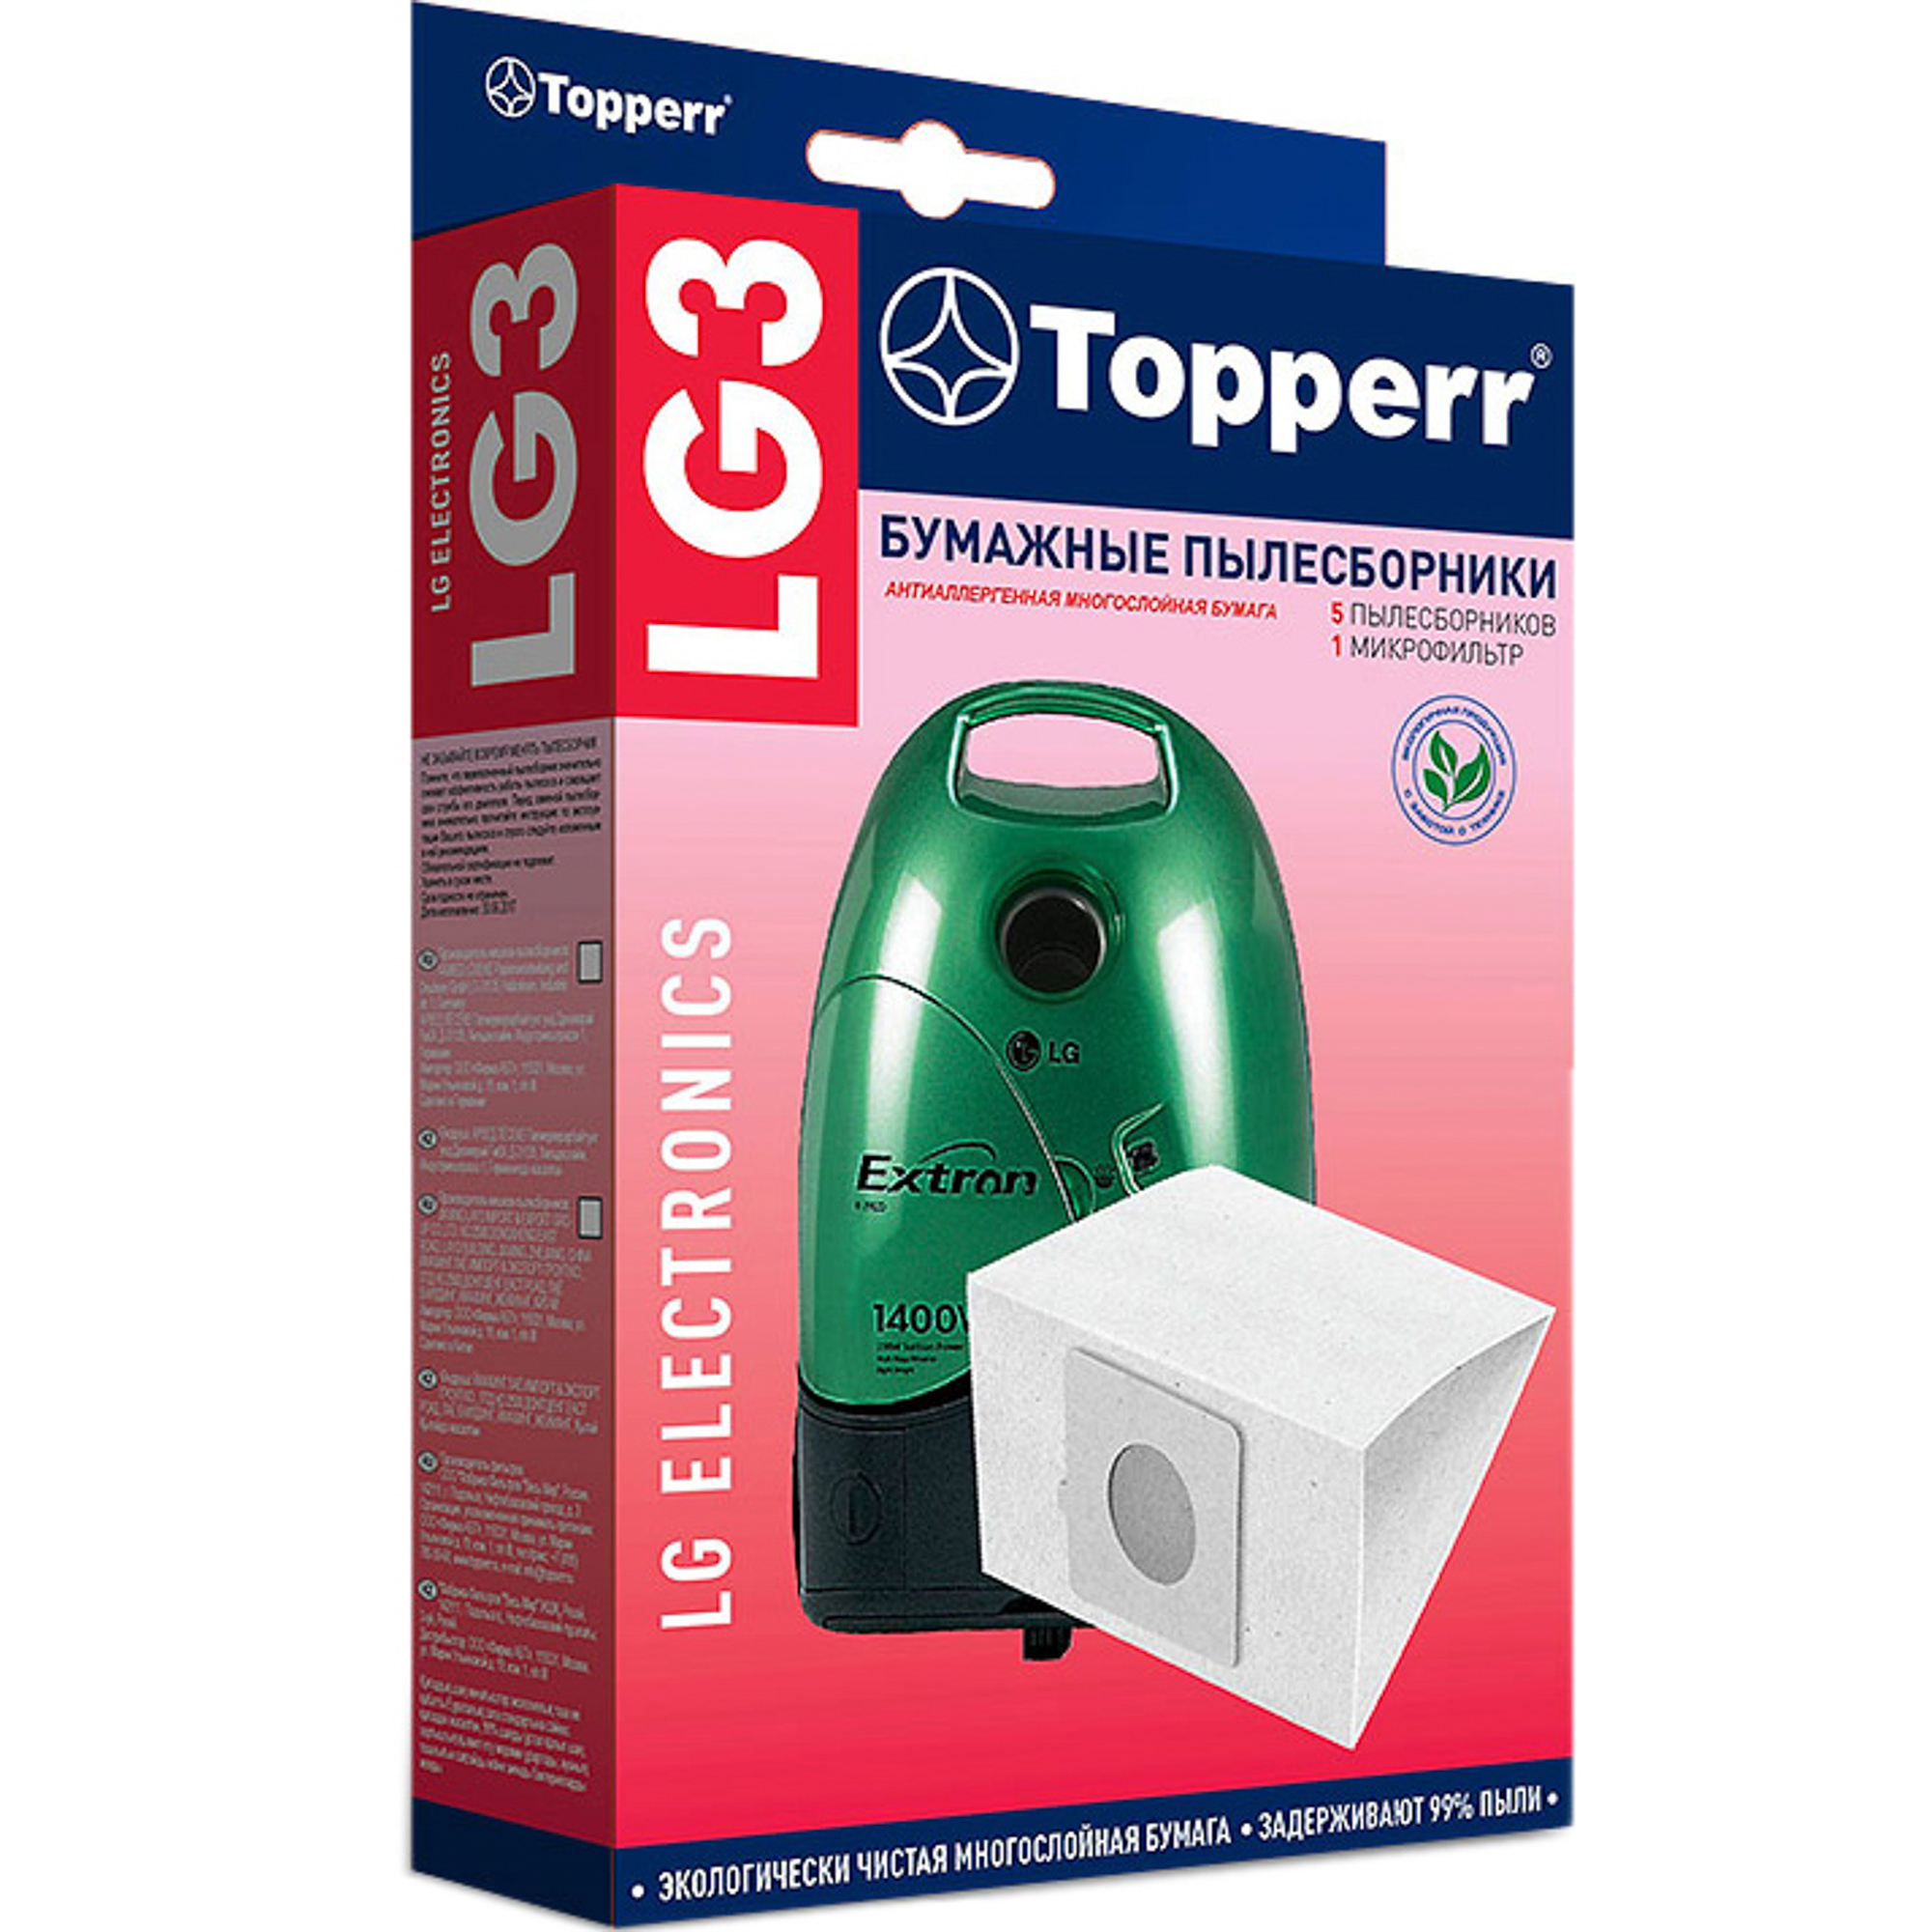 Пылесборник Topperr LG3 цена и фото